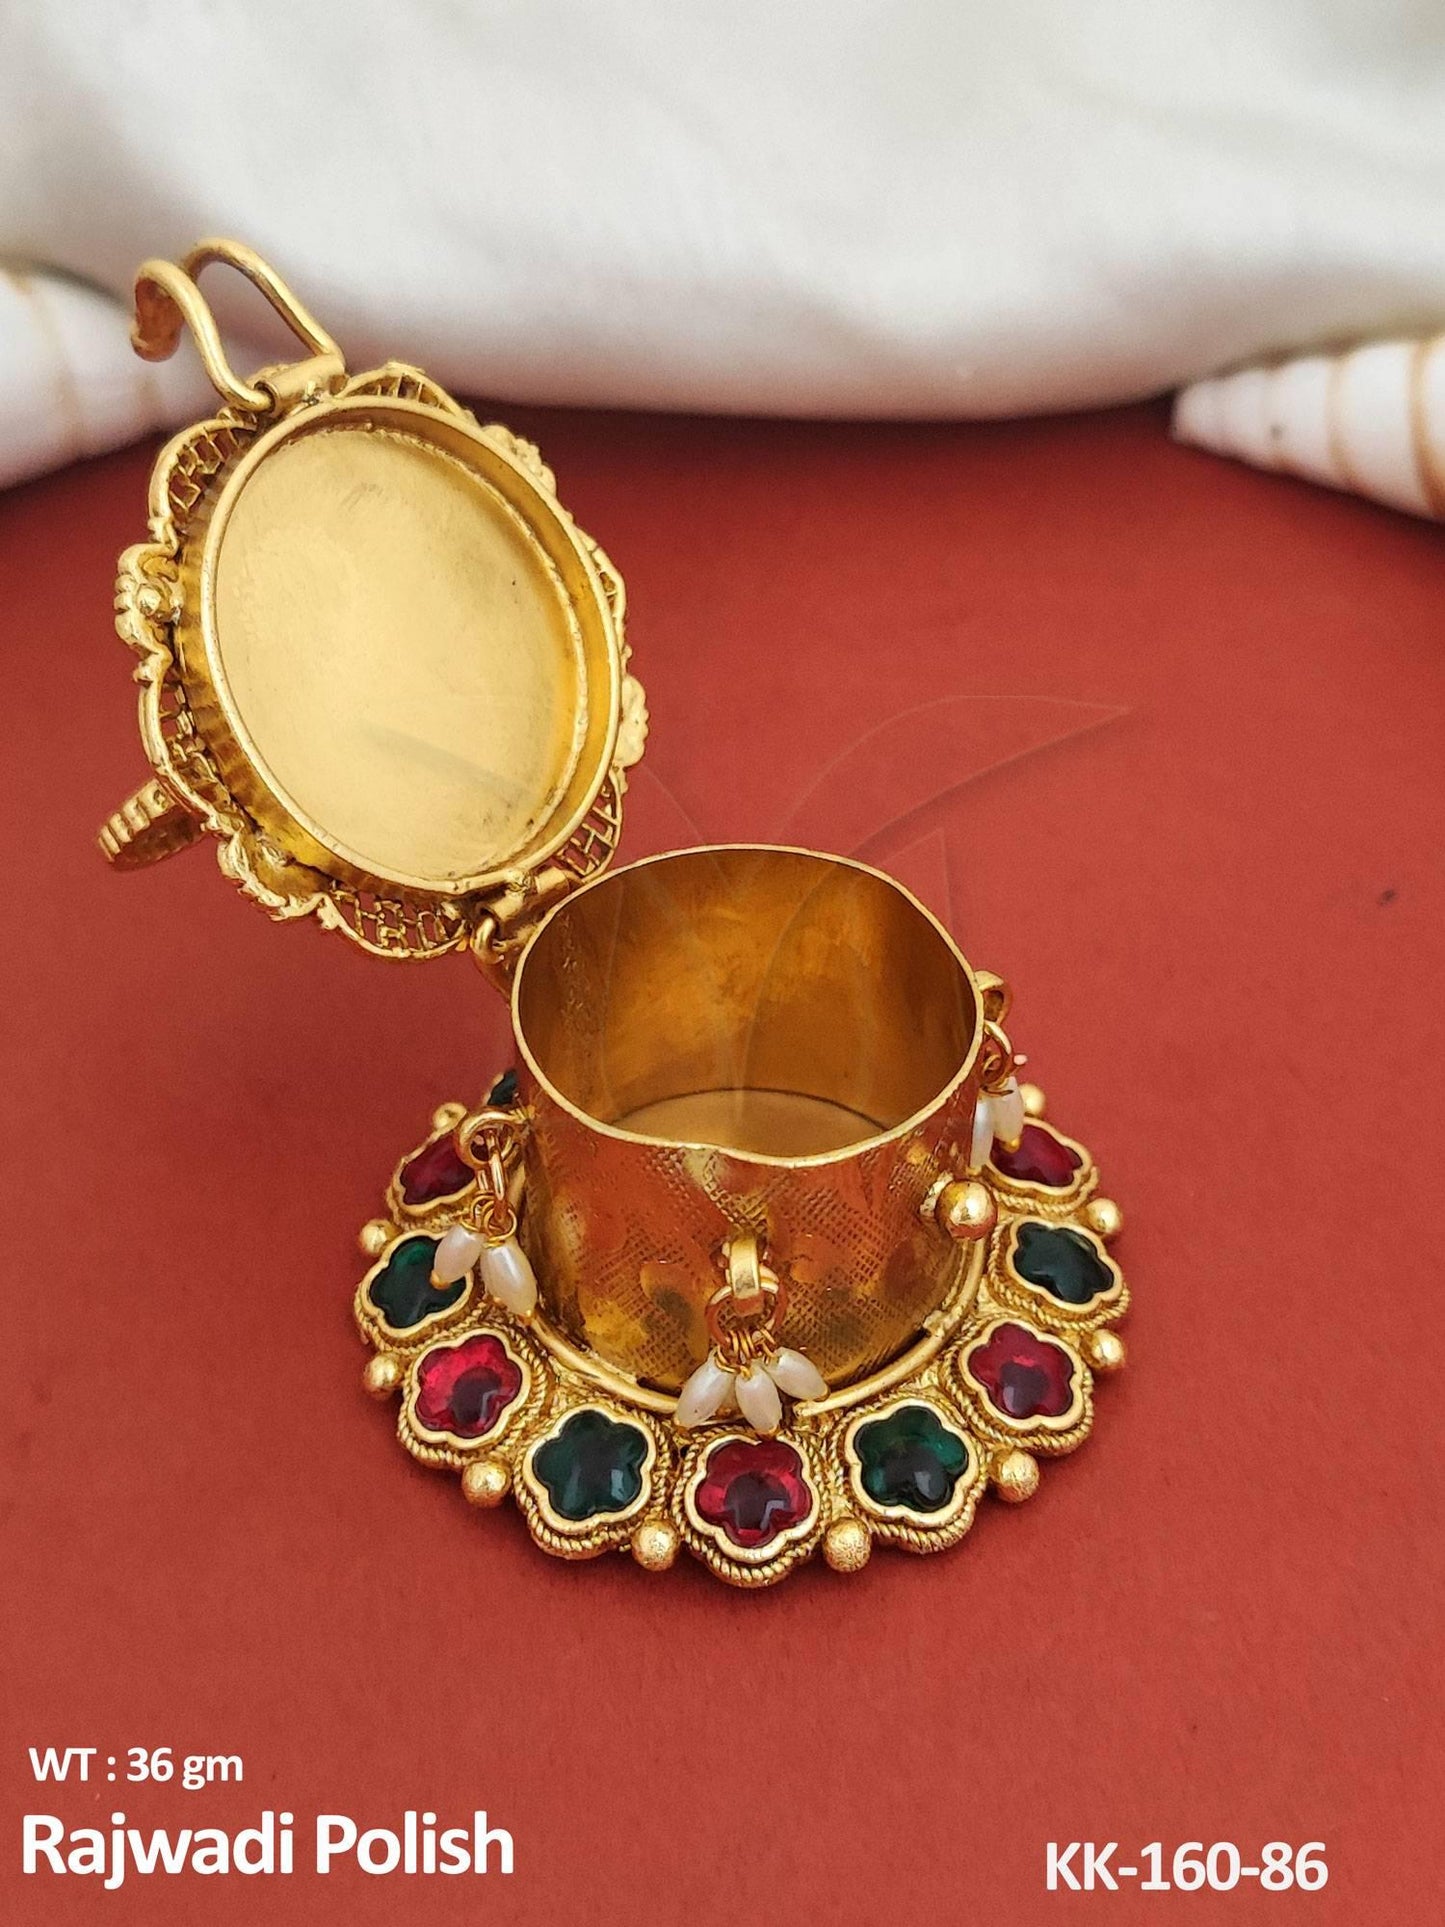 Indulge in the exquisite beauty of our Temple Jewellery Fancy Design Rajwadi Polish Sindoor Box